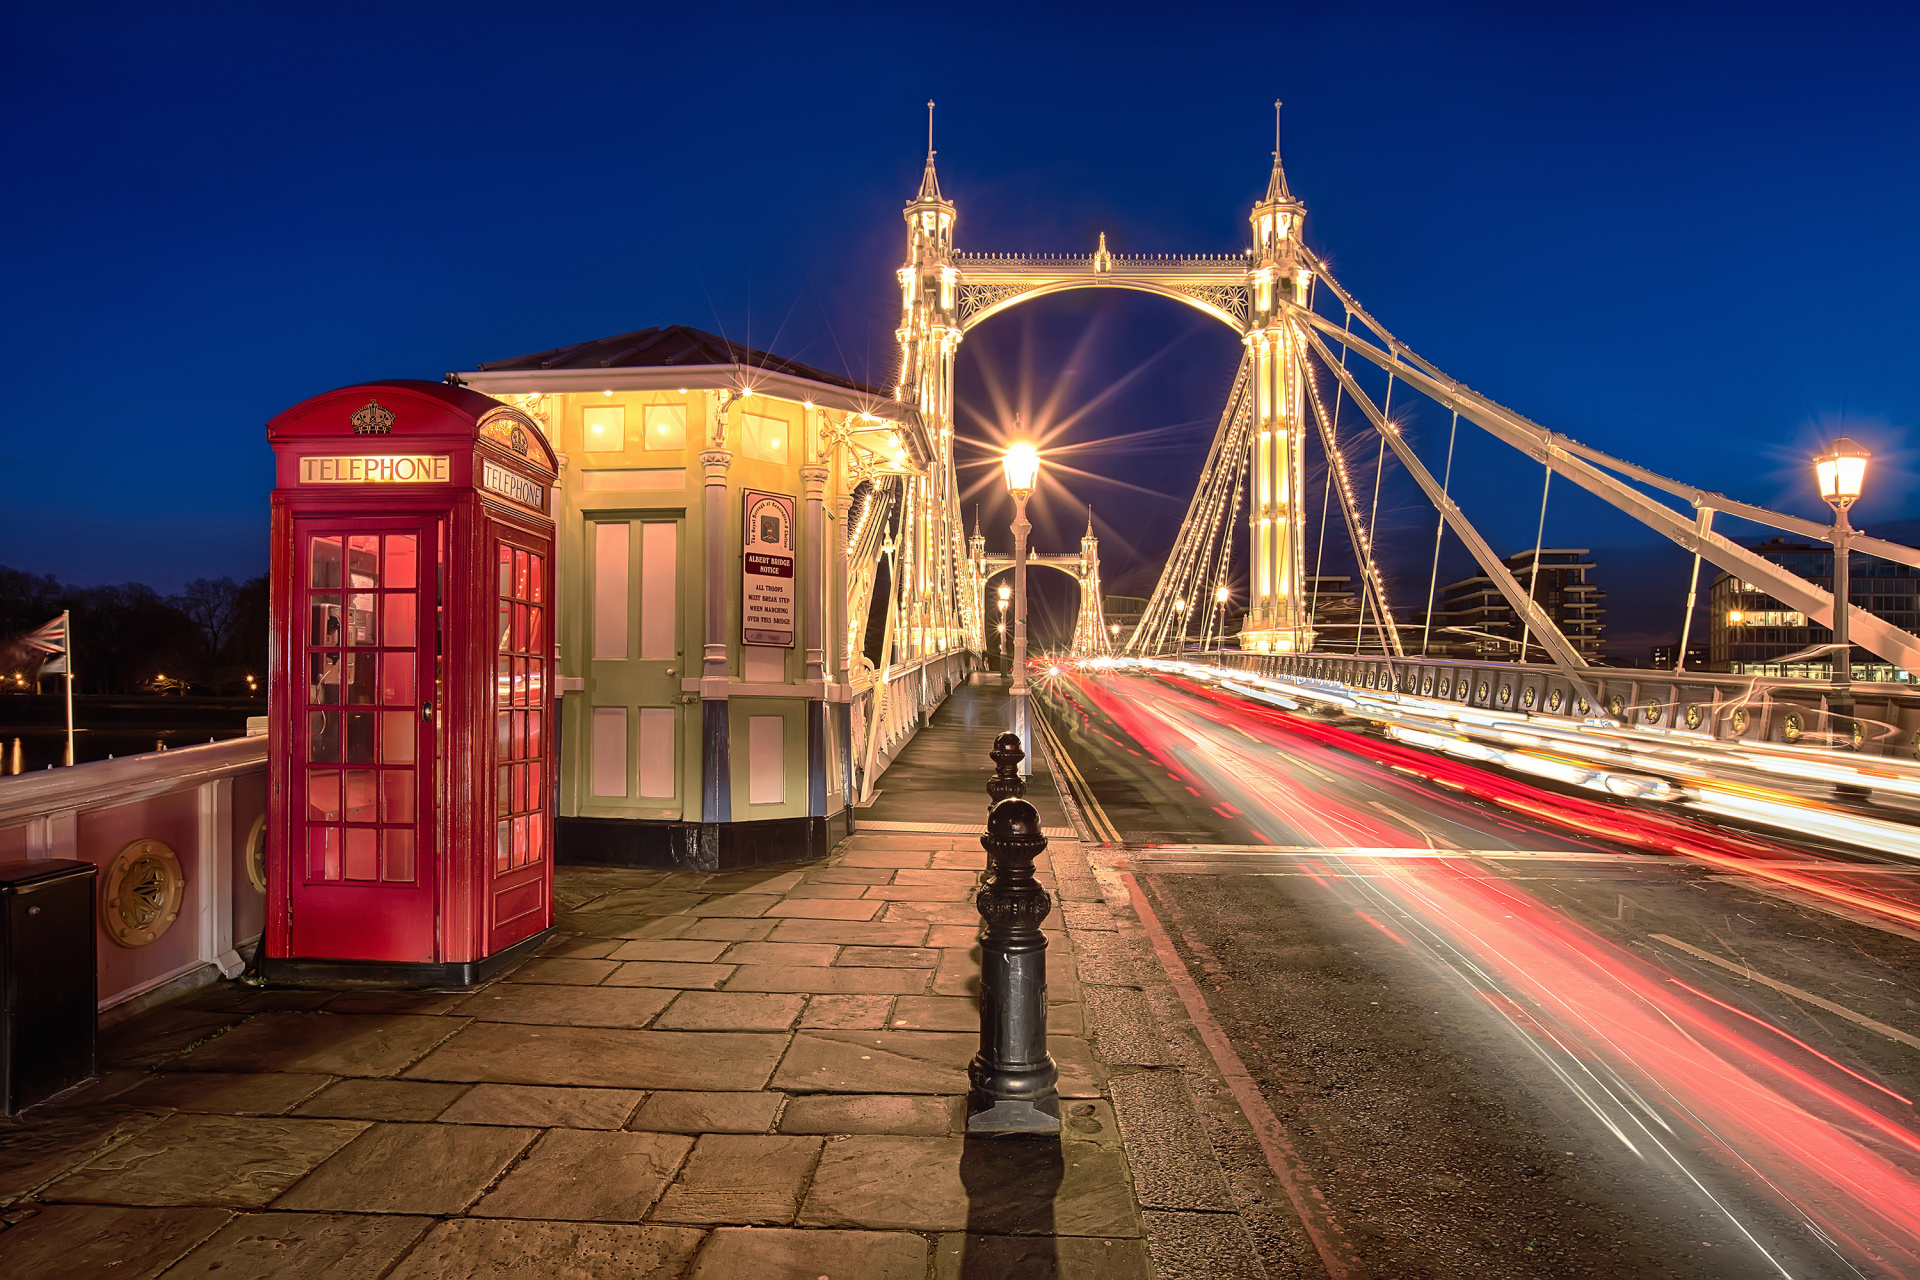 Weekend getaway in London-Albert Bridge, River Thames, Chelsea-Erin Busbee-Busbee Style-Beauty Over 40